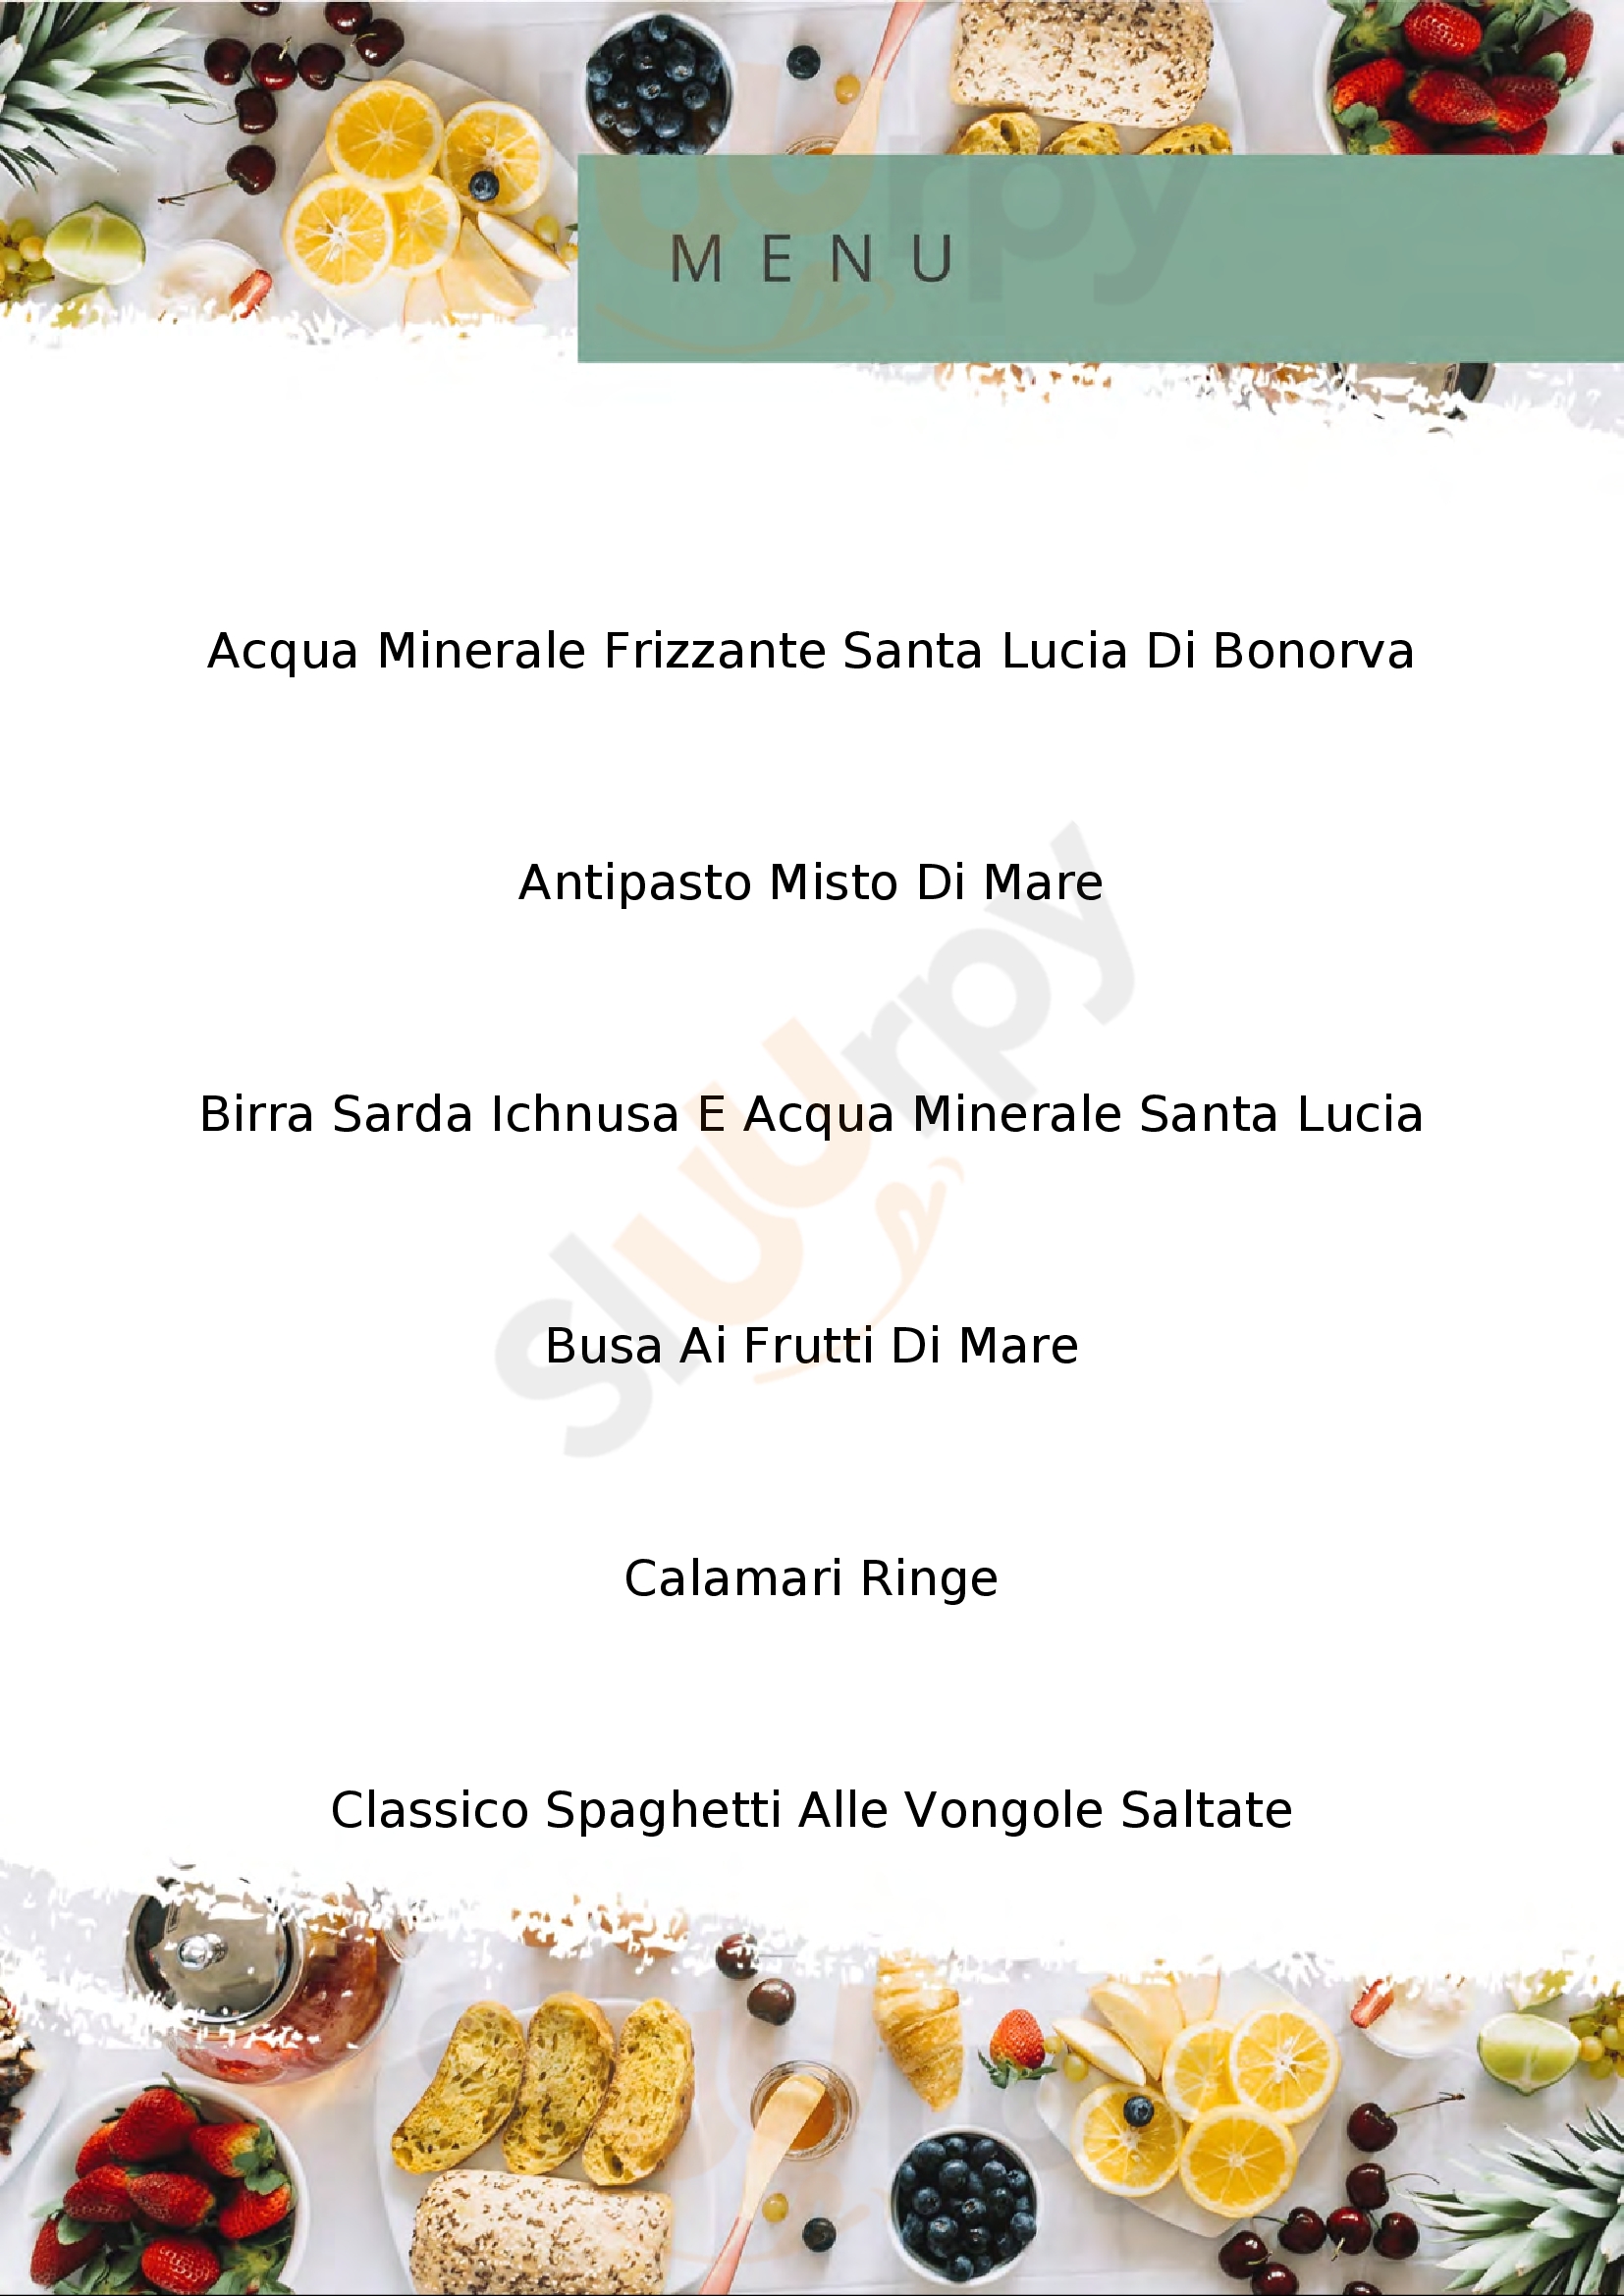 Ristorante Pizzeria Santa Ittoria Cossoine menù 1 pagina